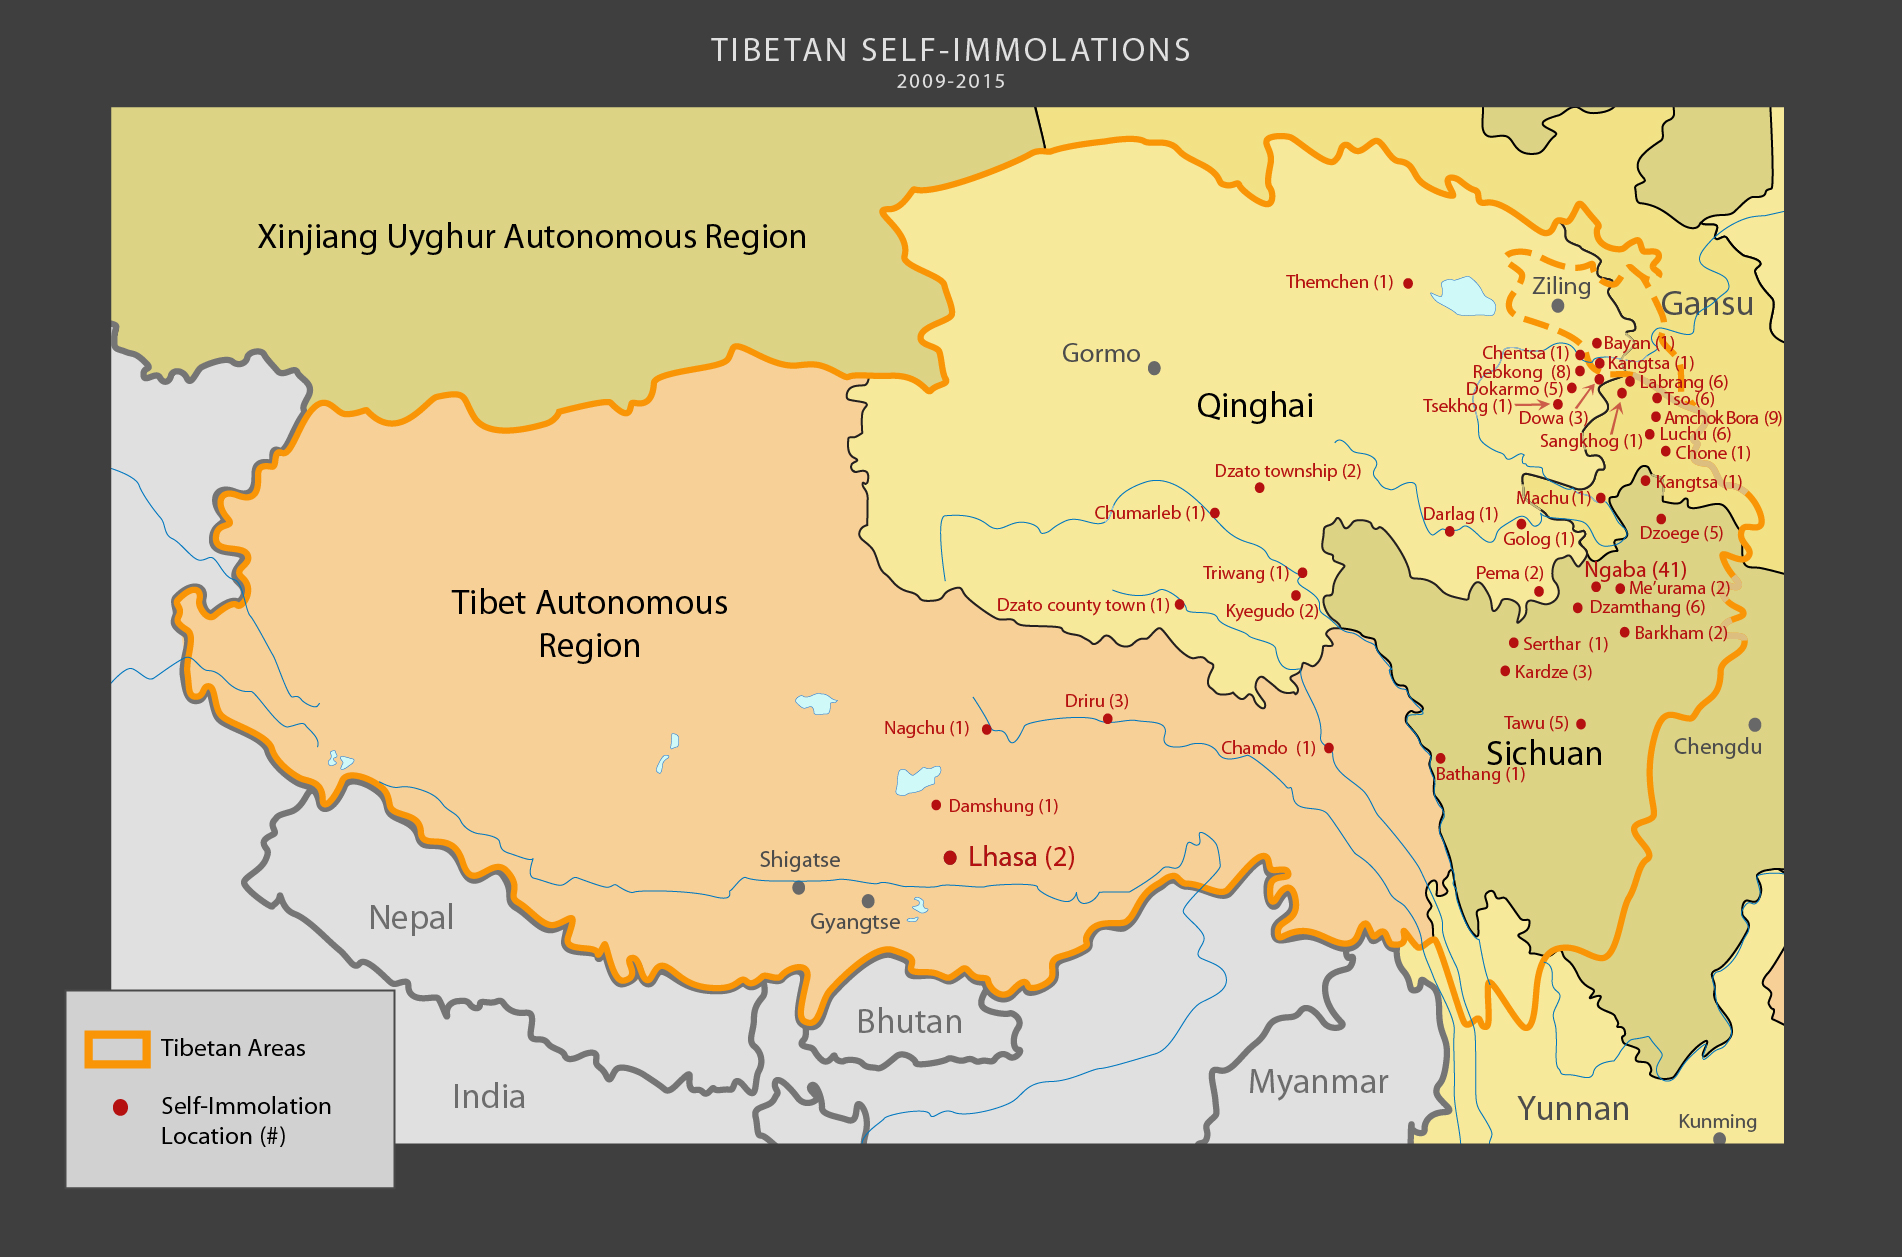 Tibetan self-immolations from 2009-2015